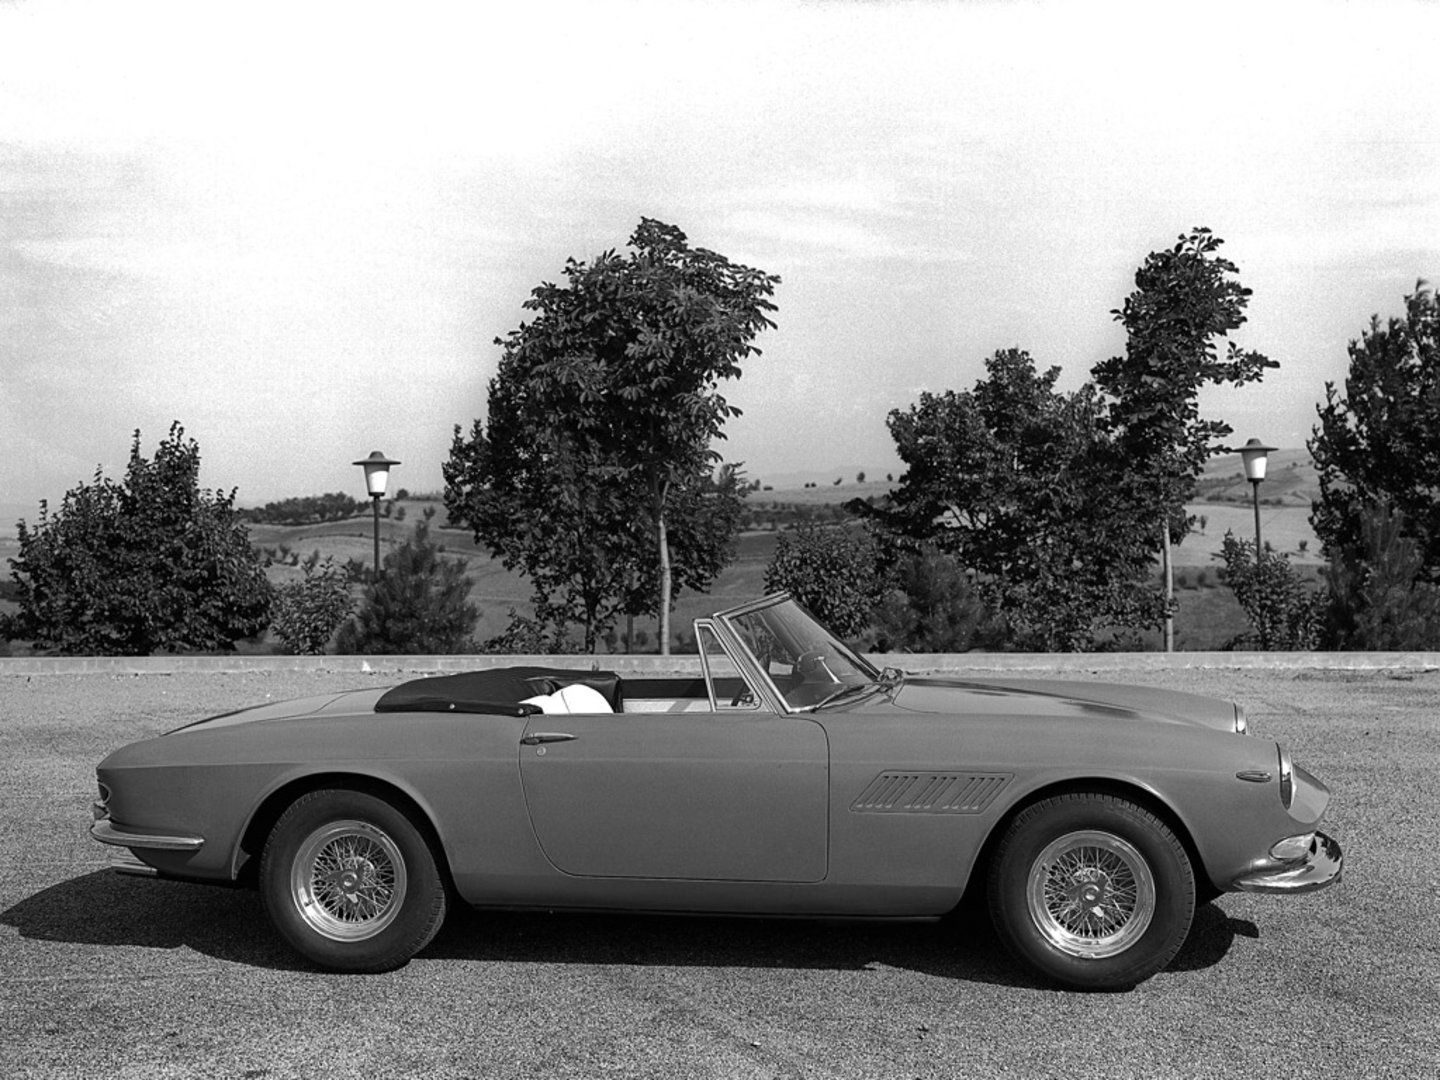 1964 - 1966 Ferrari 275 GTS